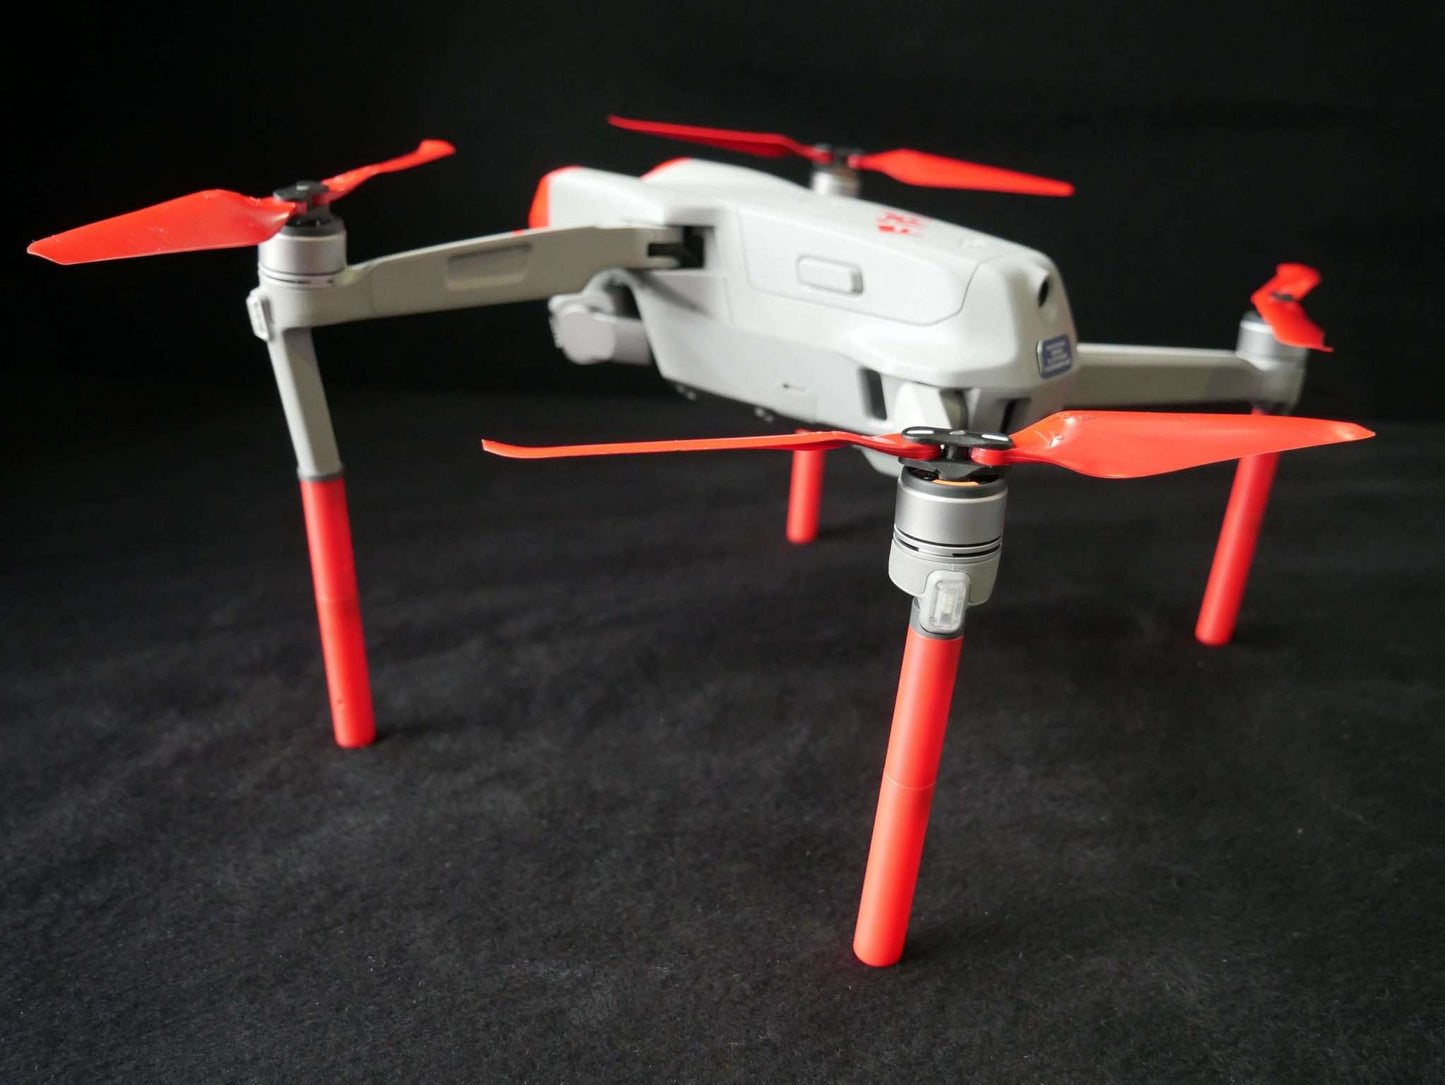 Montierte DFS-G- Verlängerungen für Landegestelle (rot) an der DJI Air 2S Drohne. Rückansicht